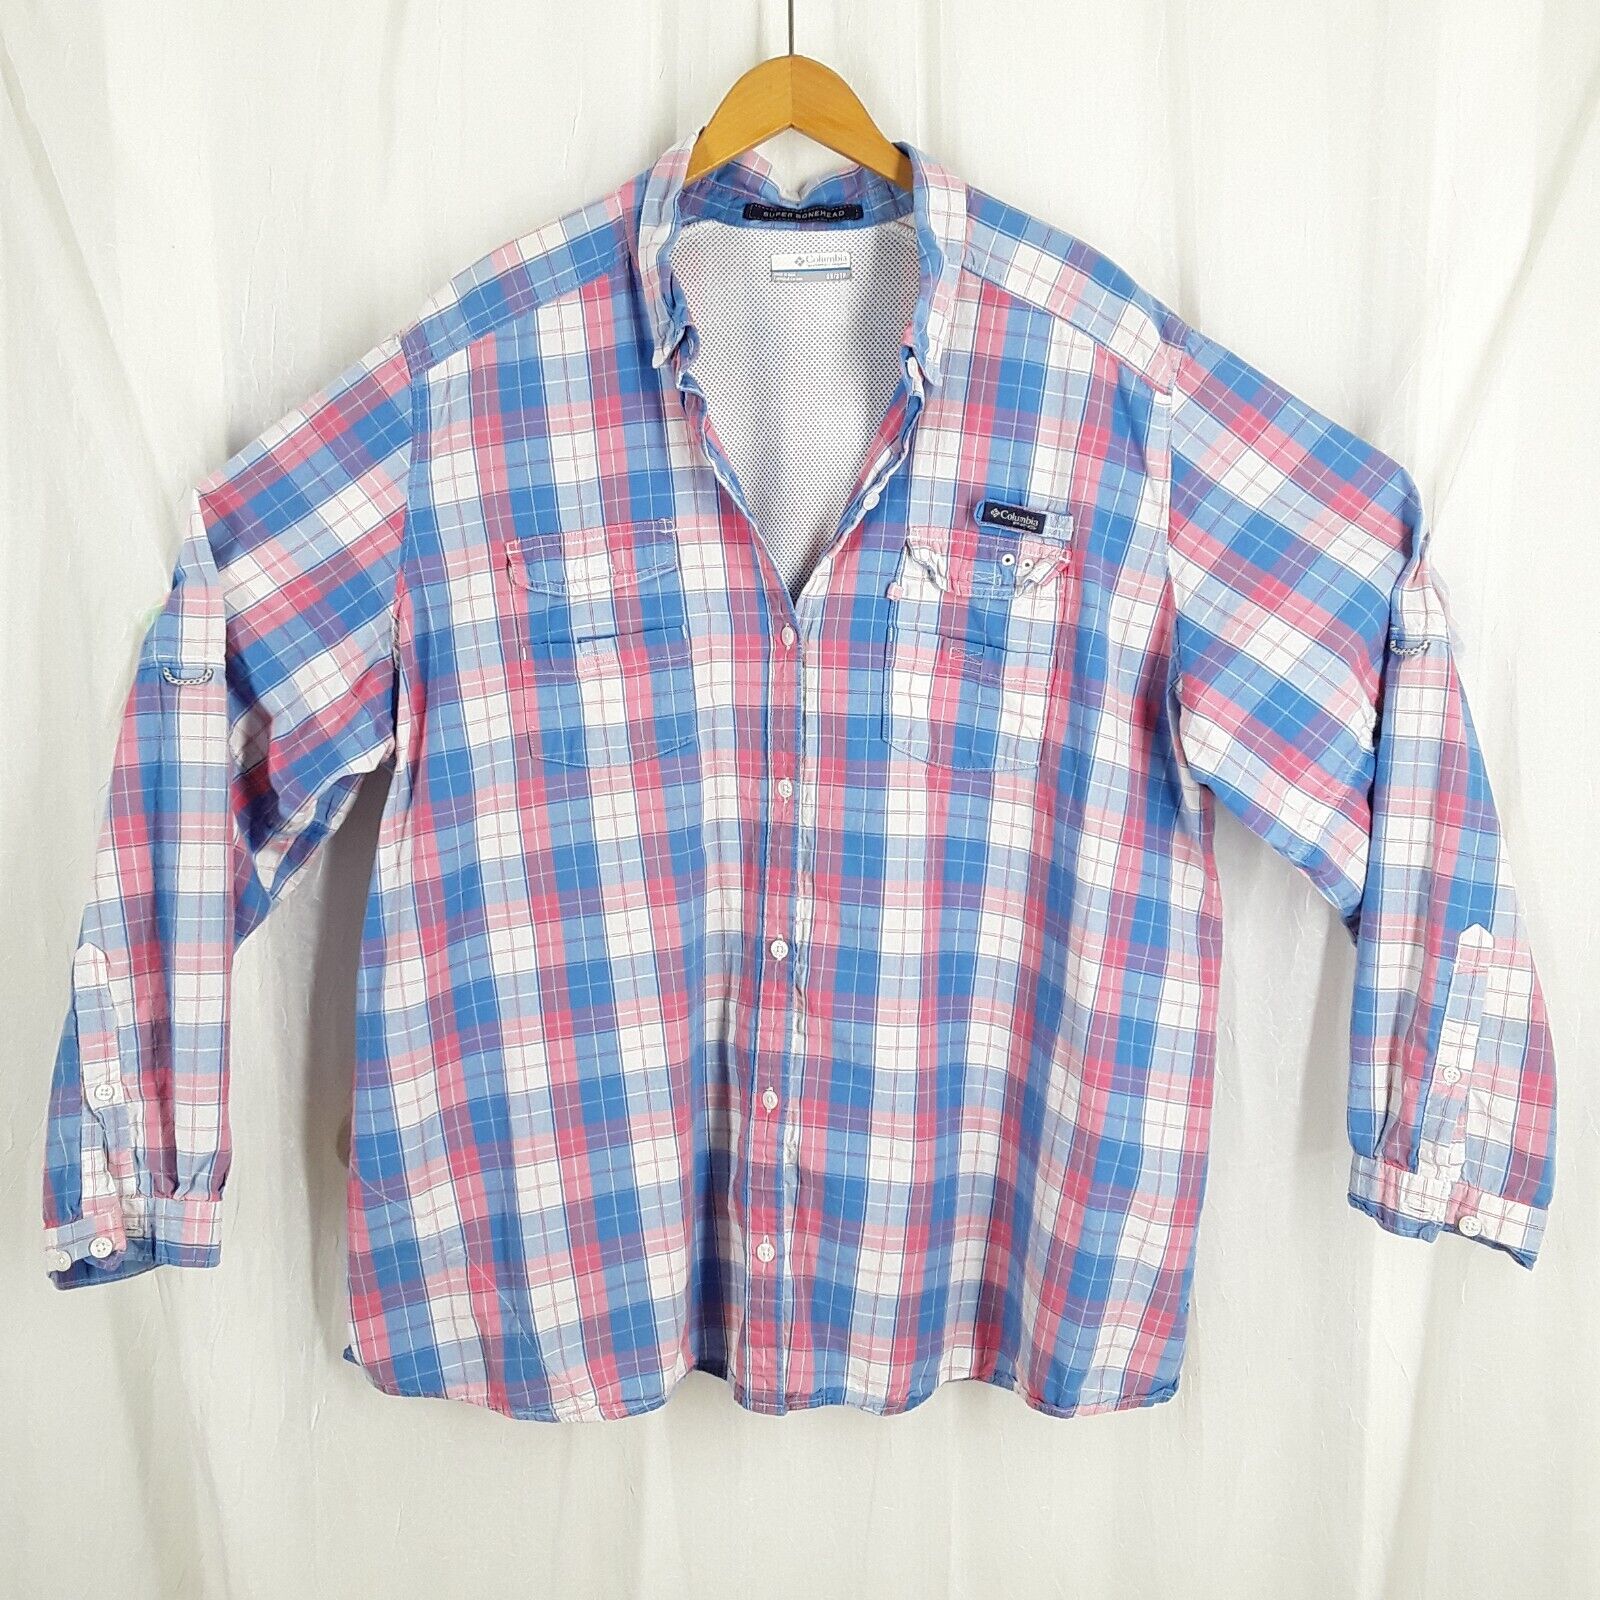 3X Columbia Fishing Shirt, Long Sleeve, Blue Pink Plaid, Super Bonehead PFG Vent